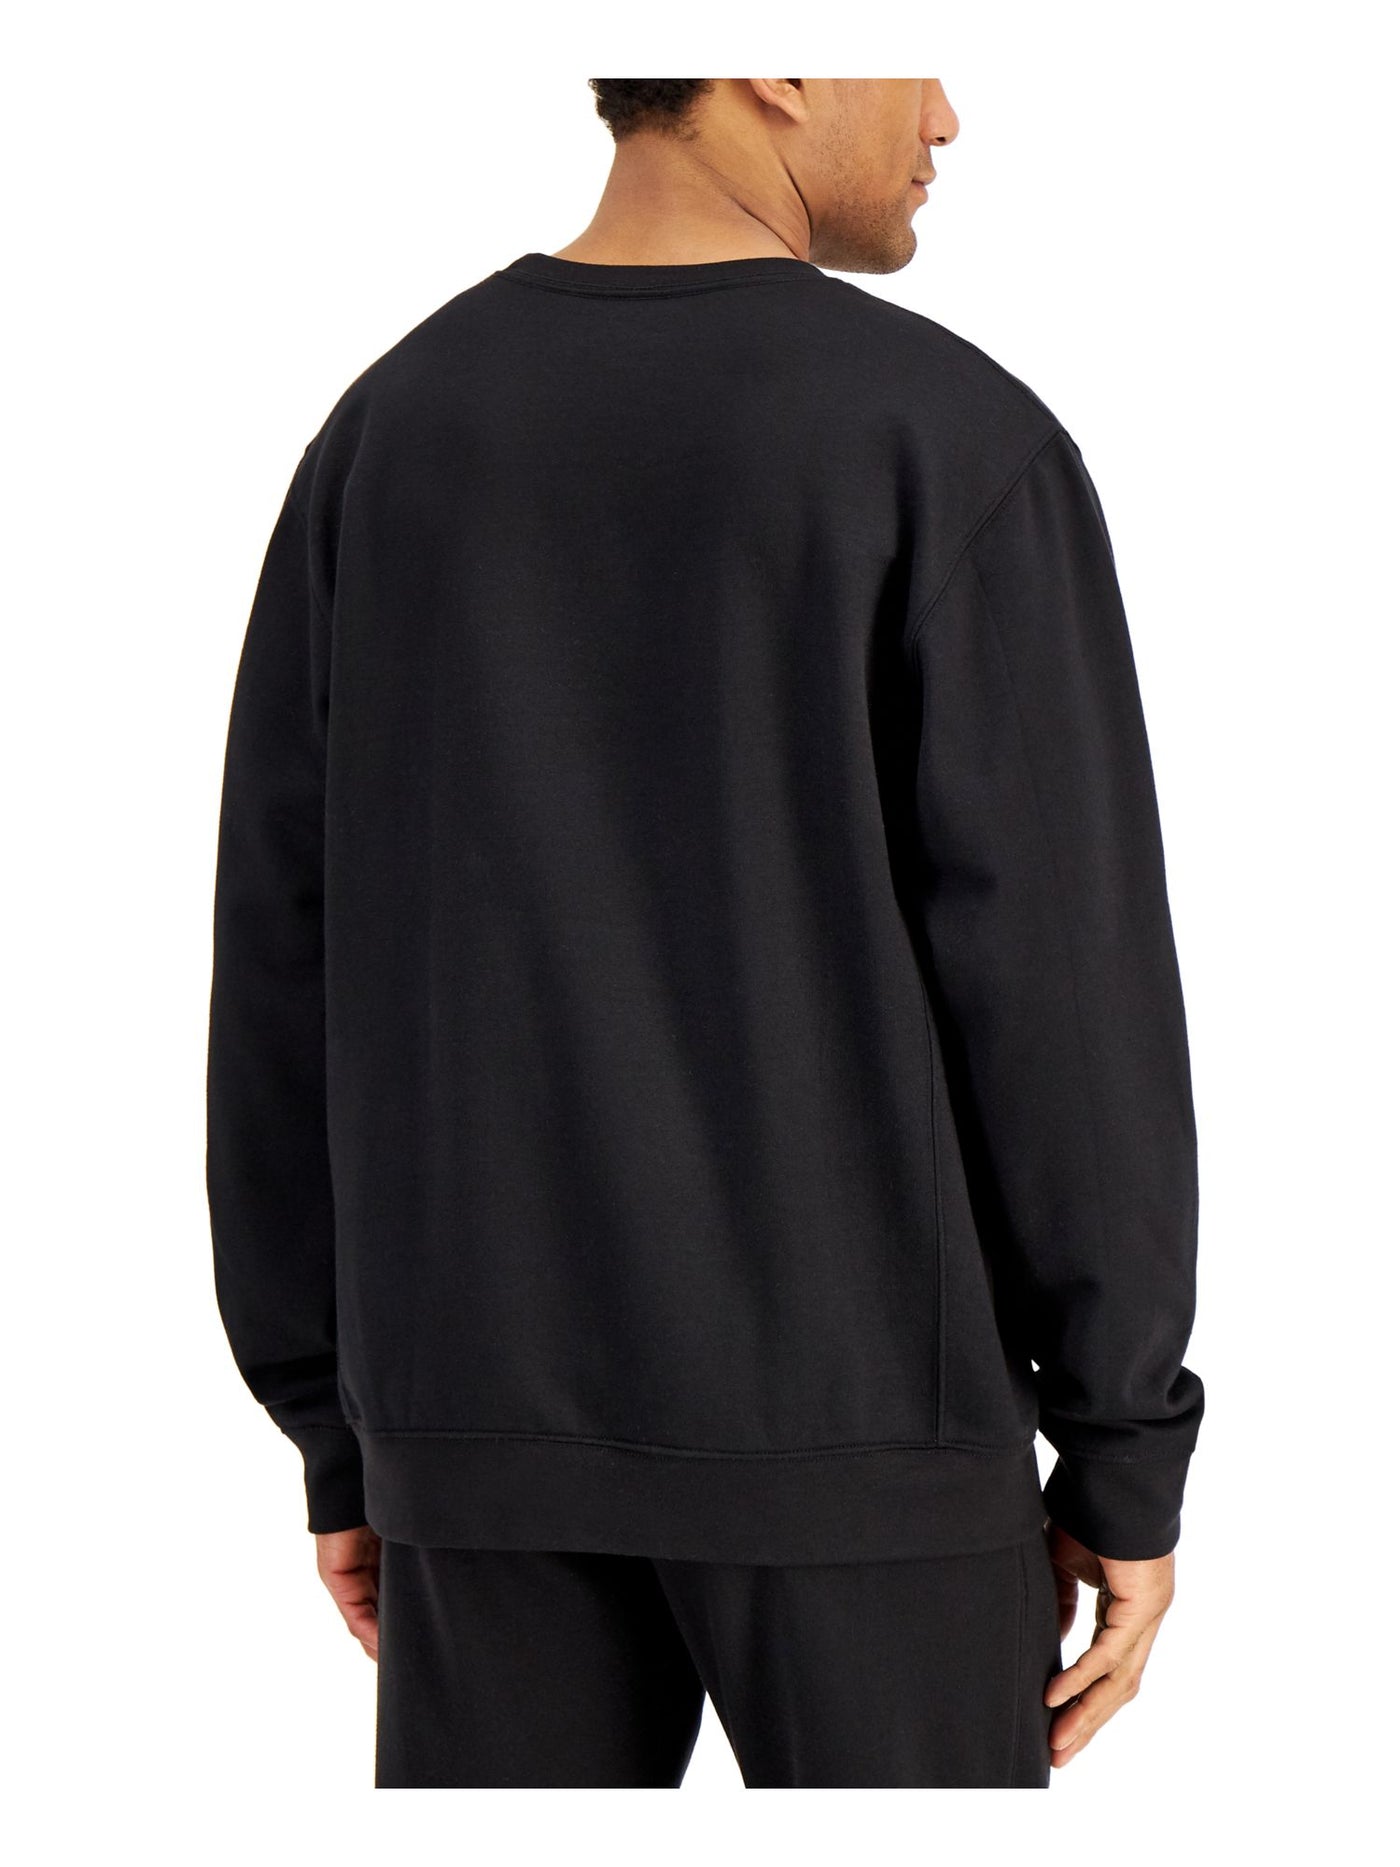 RUSSELL ATHLETIC Mens Ricardo Black Logo Graphic Long Sleeve Crew Neck Fleece Sweatshirt S